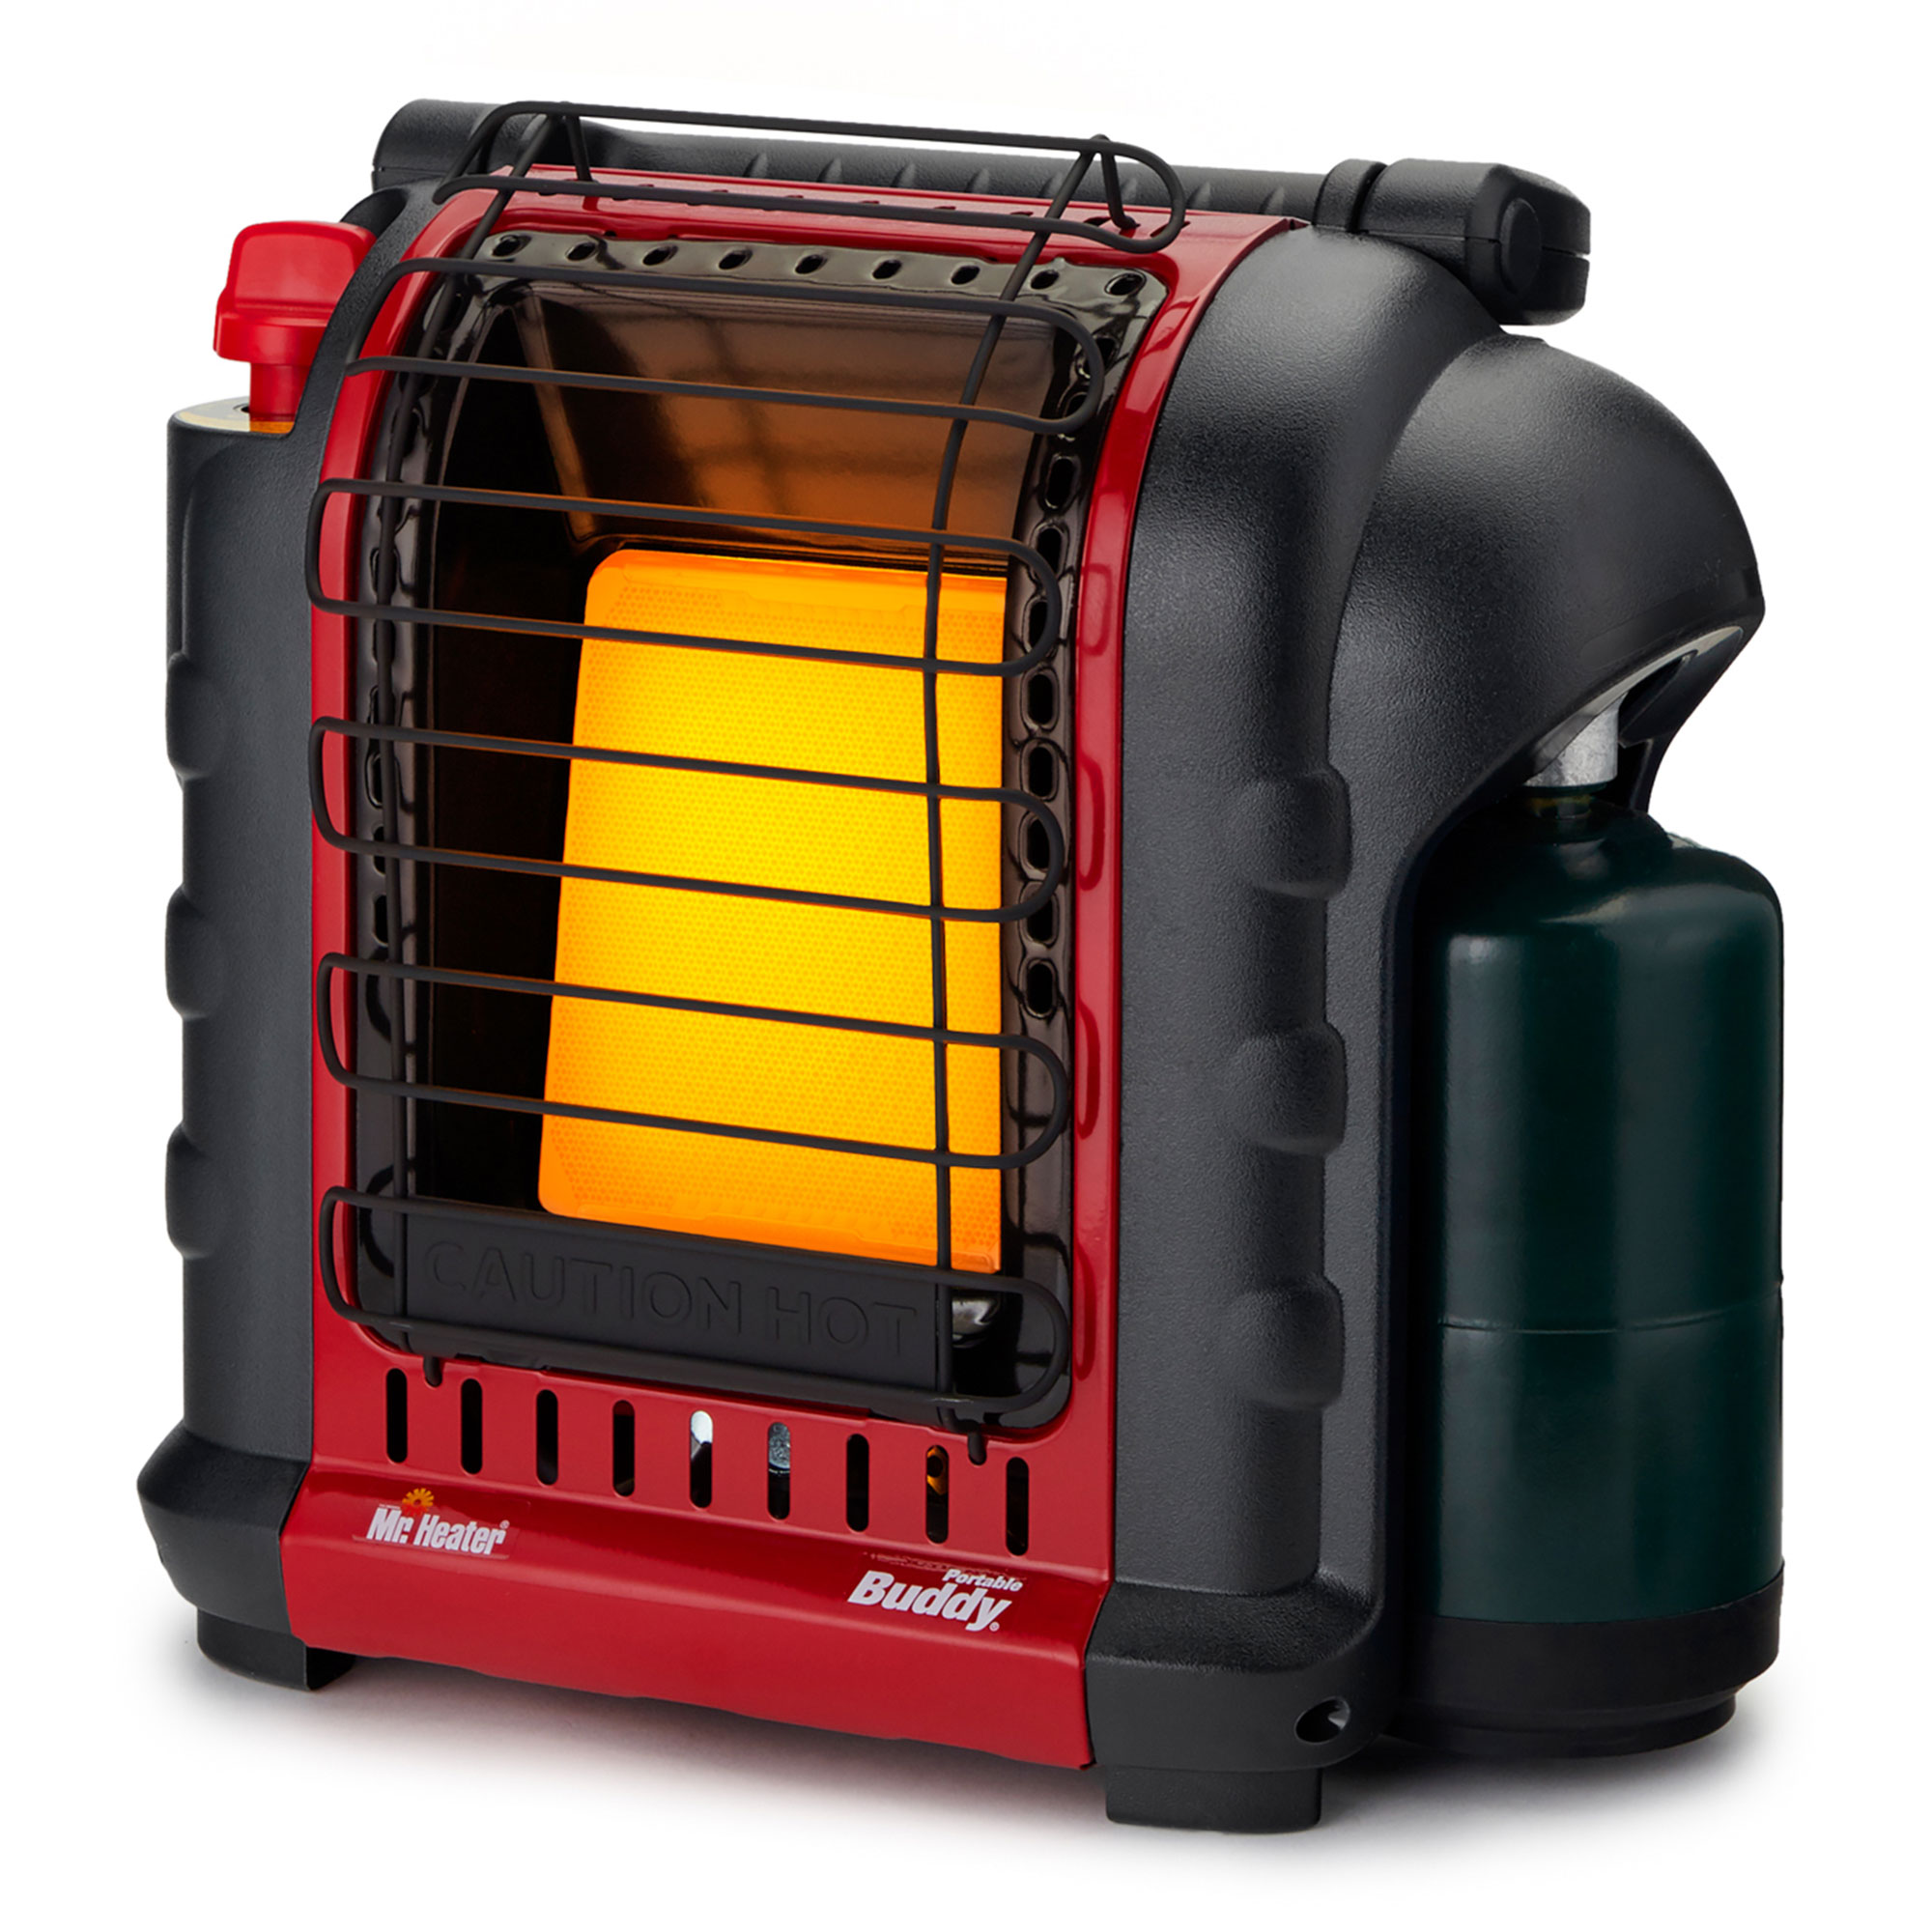 Mr. Heater Brand Portable Buddy 9,000 BTU Outdoor Camping Liquid Propane Heater - image 1 of 9